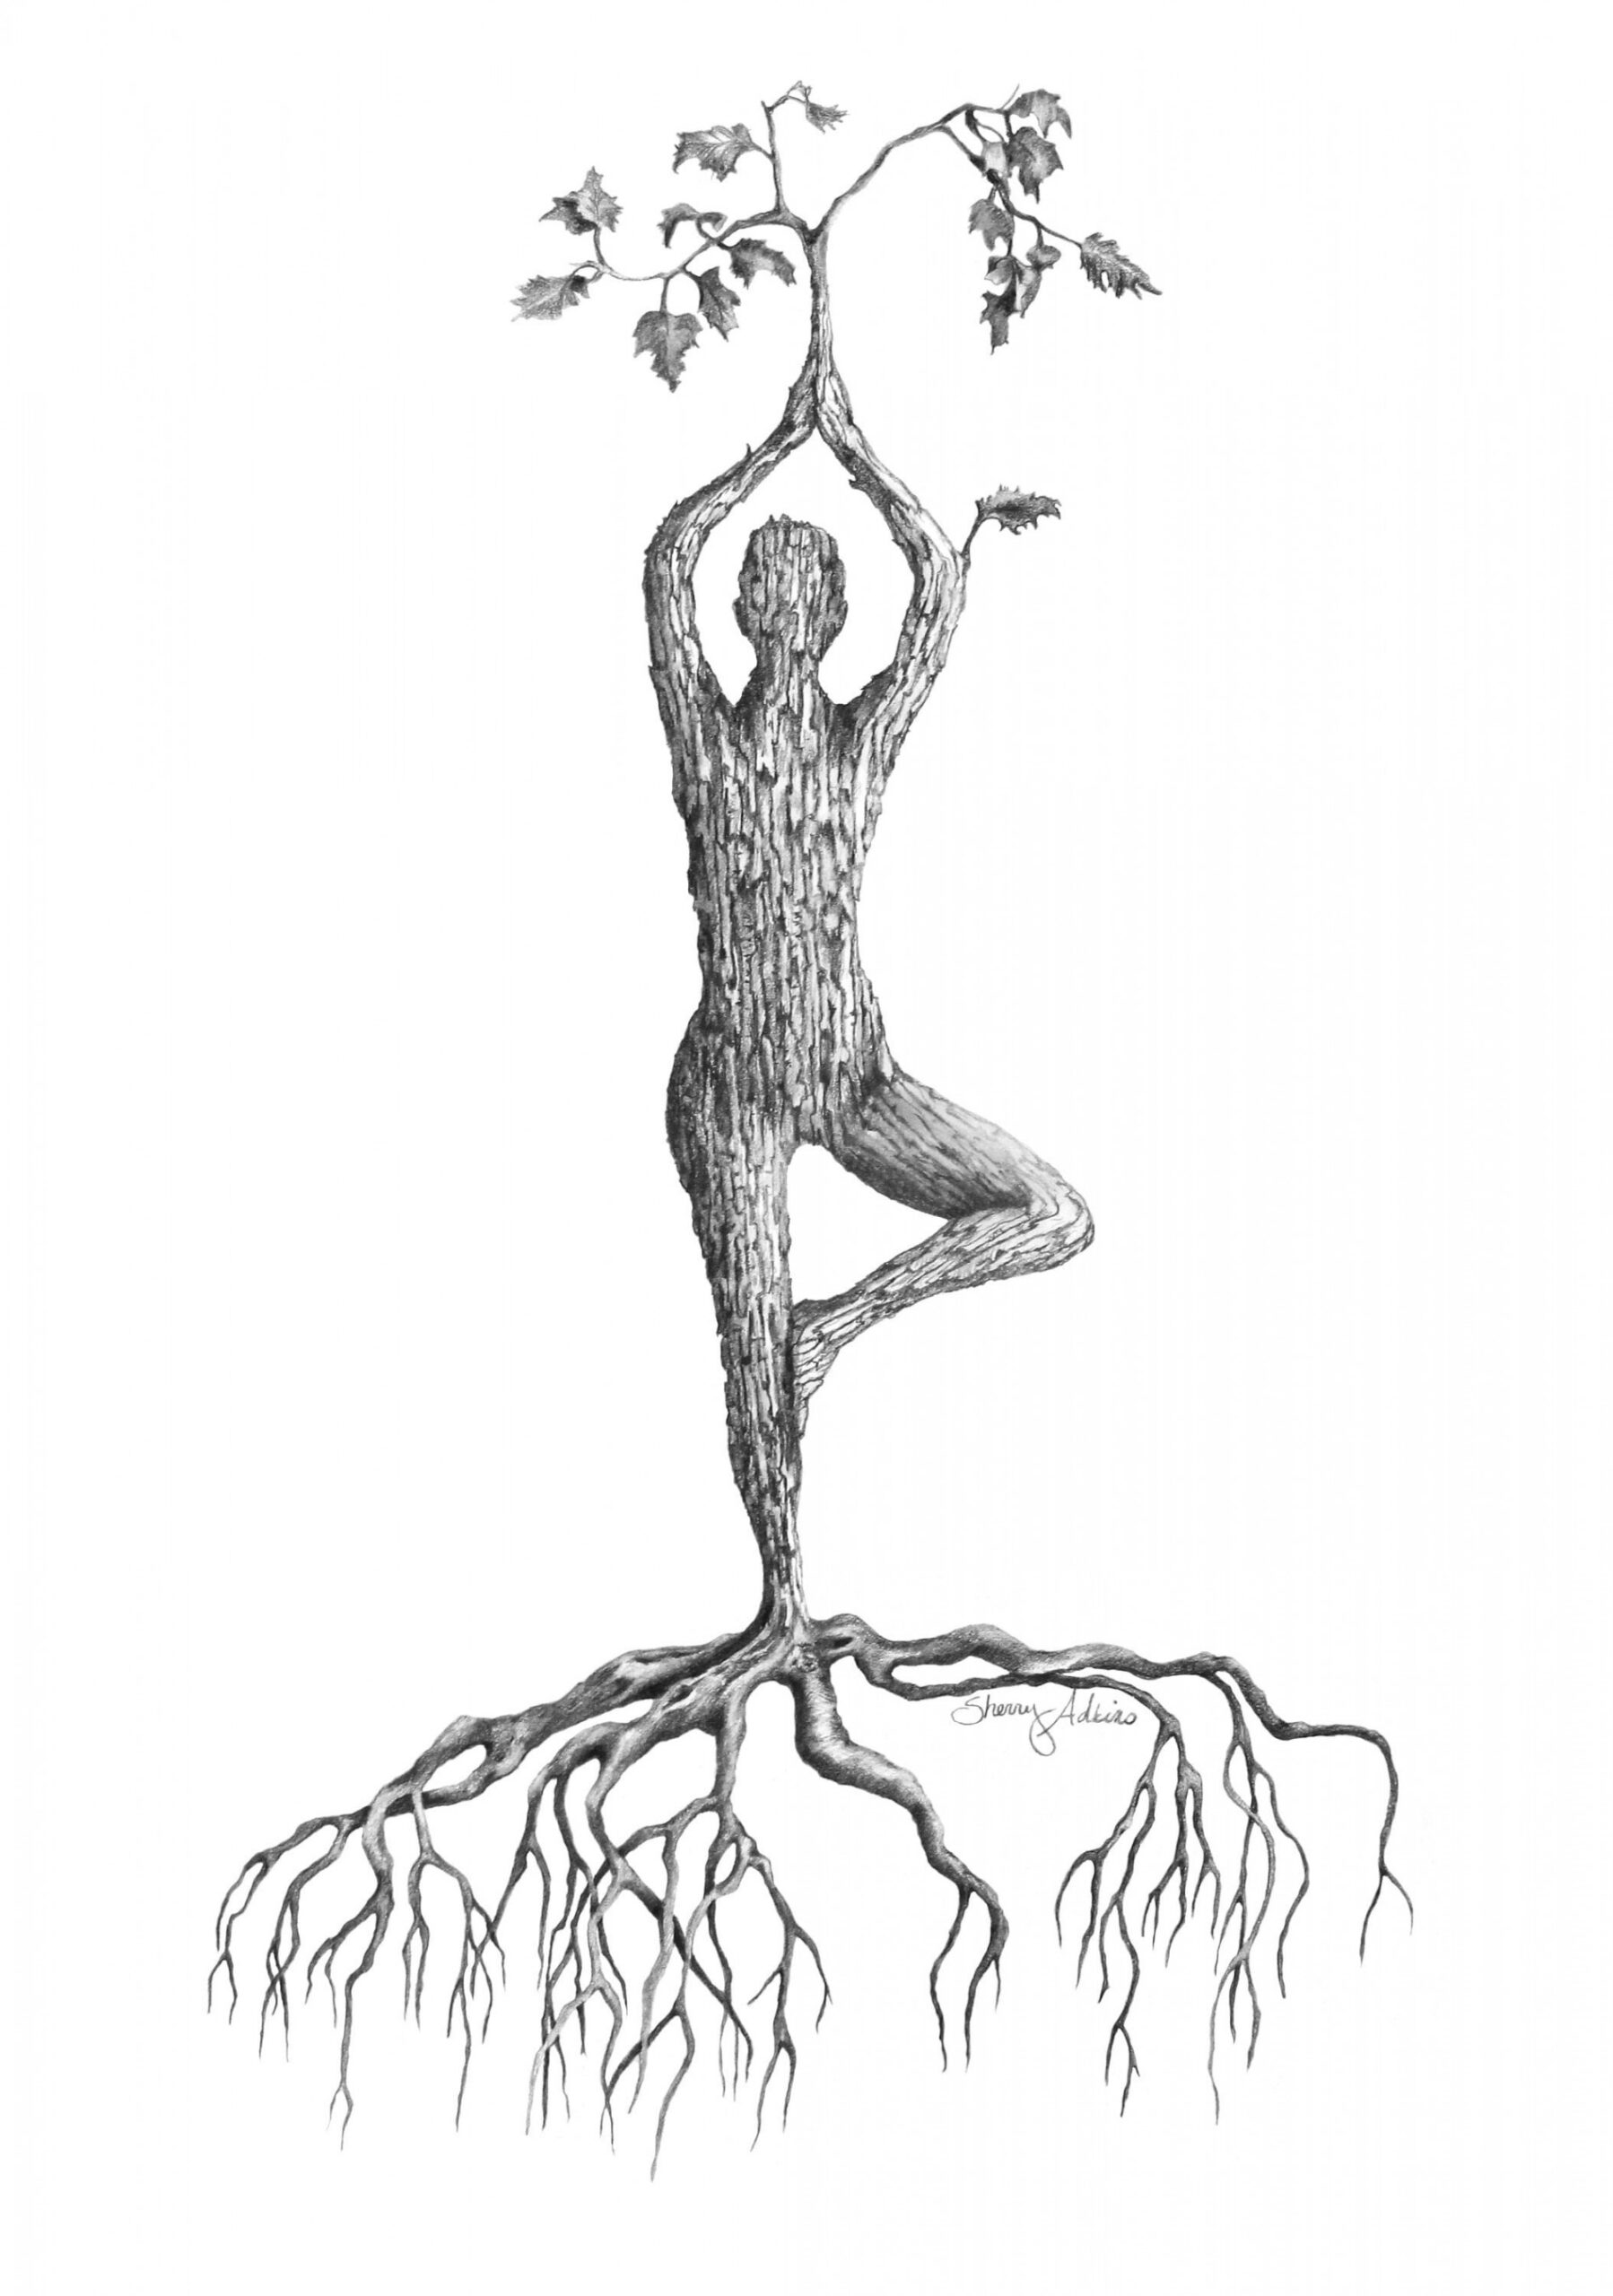 Yoga art, yoga wall decor, tree pose, pencil drawing print